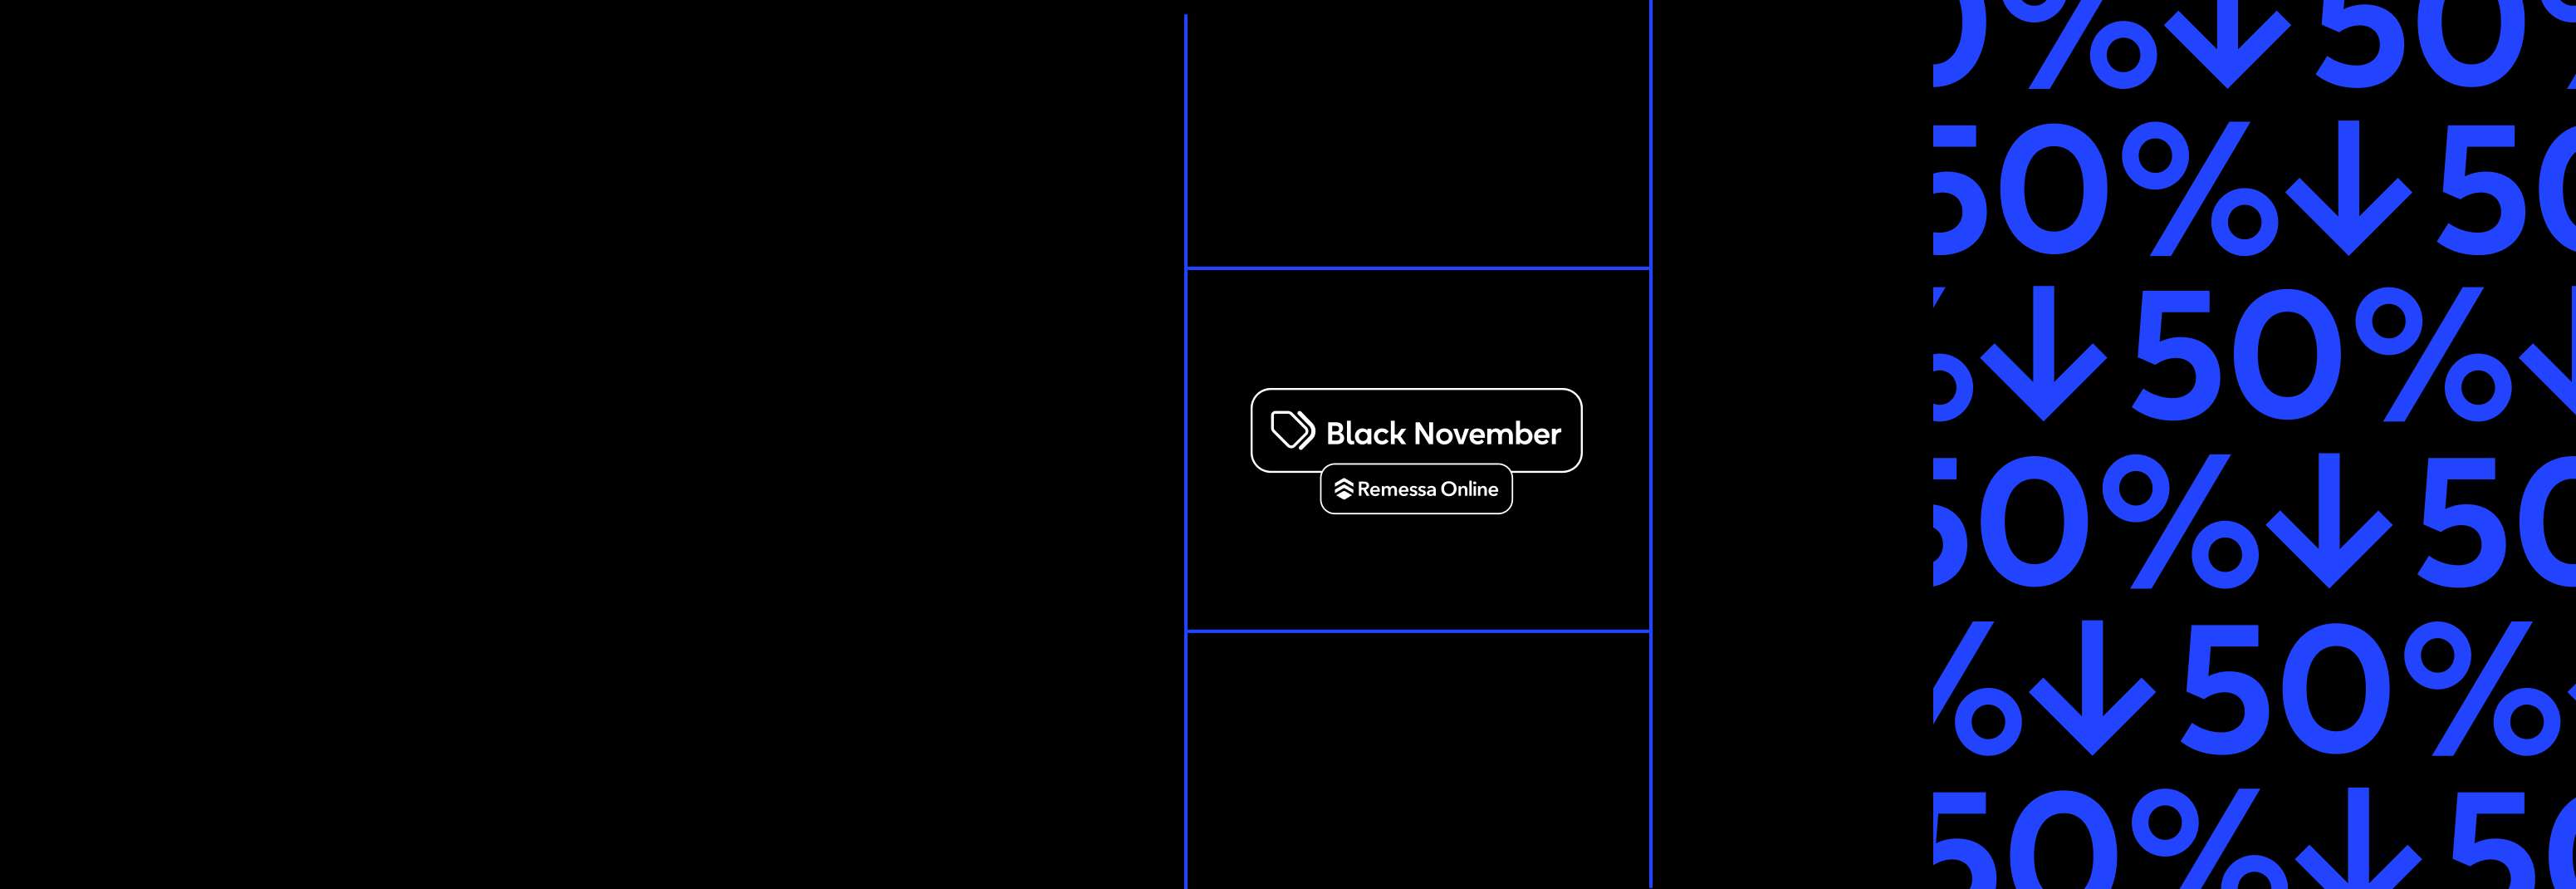 black-november-pf_banner-hero (1).png